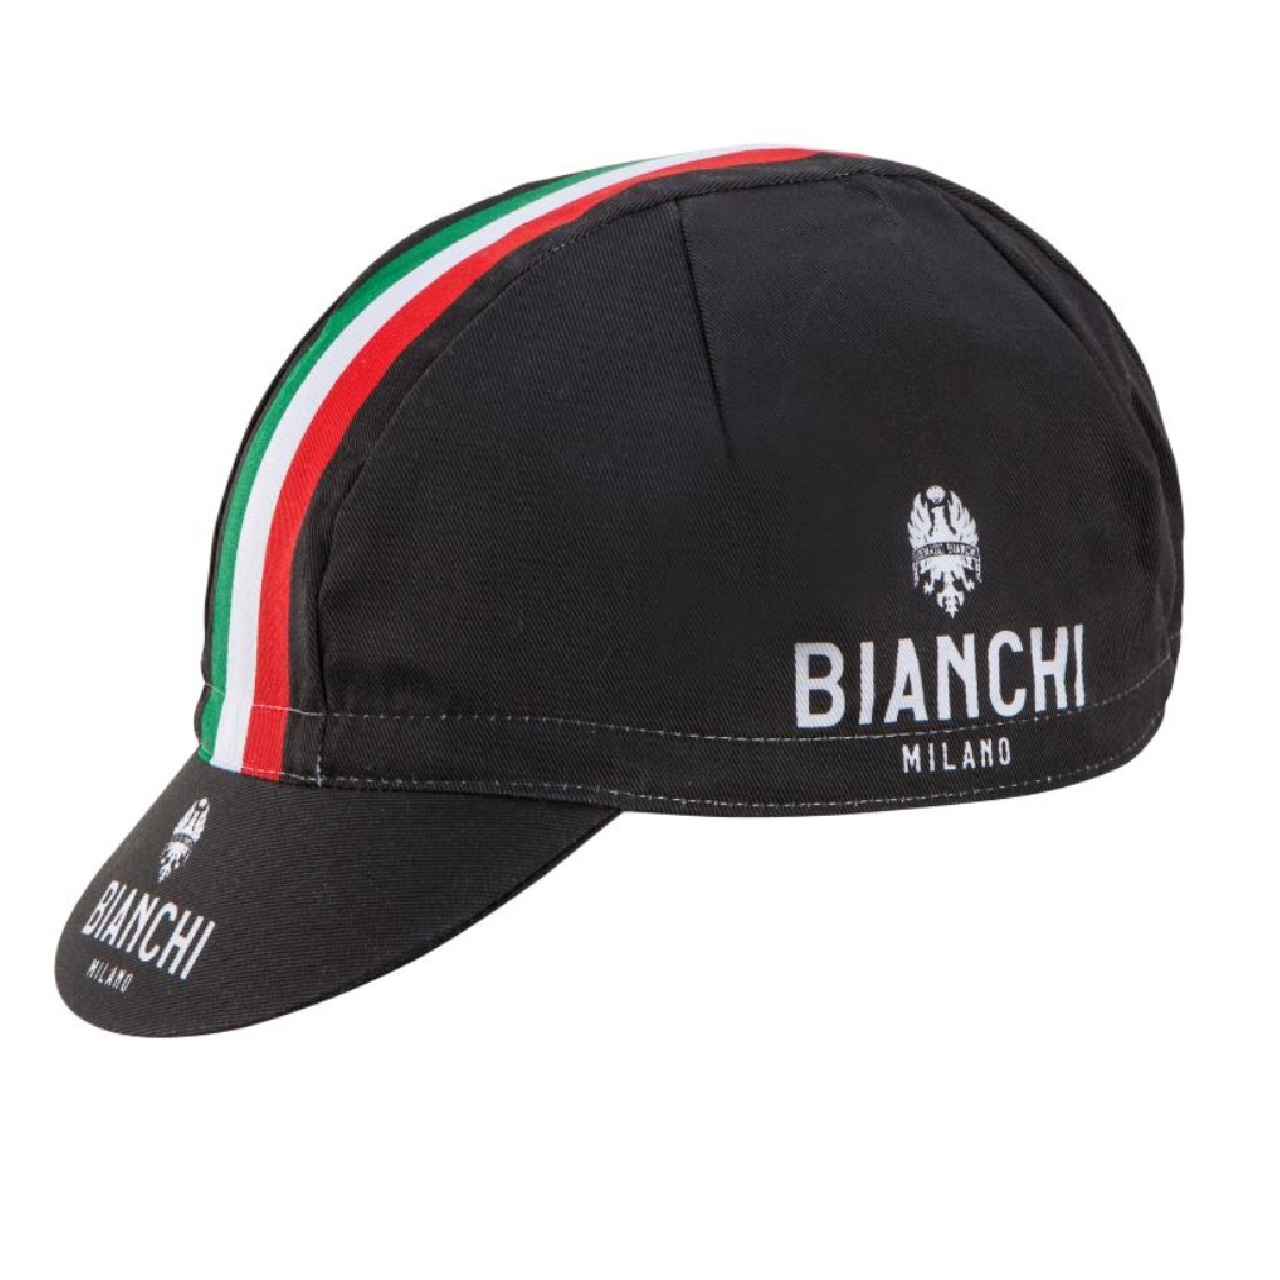 Bianchi Summer Cycling Cap Black Italia